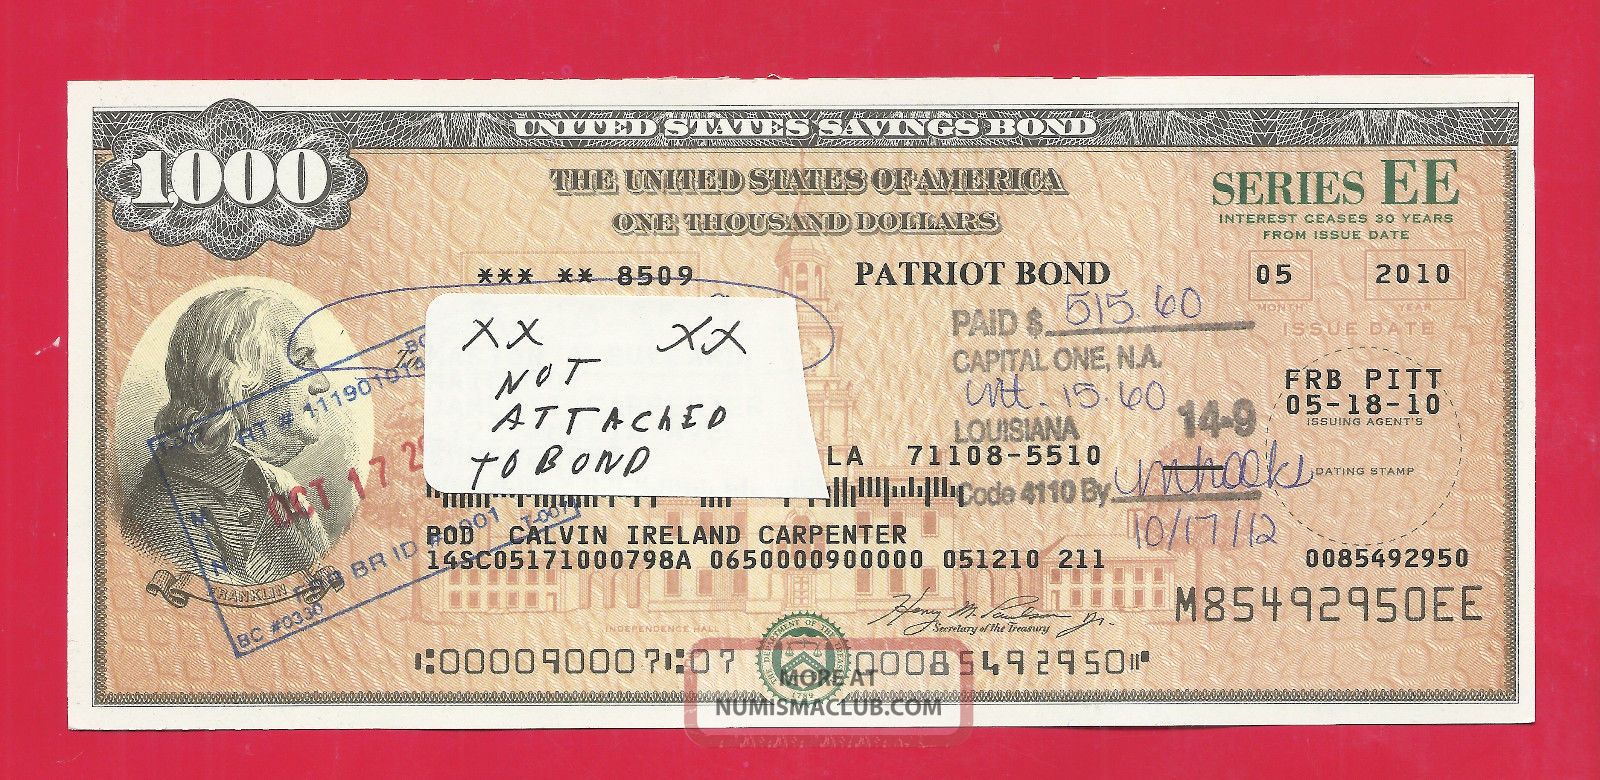 Us Savings Bond Franklin Bond $1,  000 Cashed Series Ee 05 - 2010 Stocks & Bonds, Scripophily photo